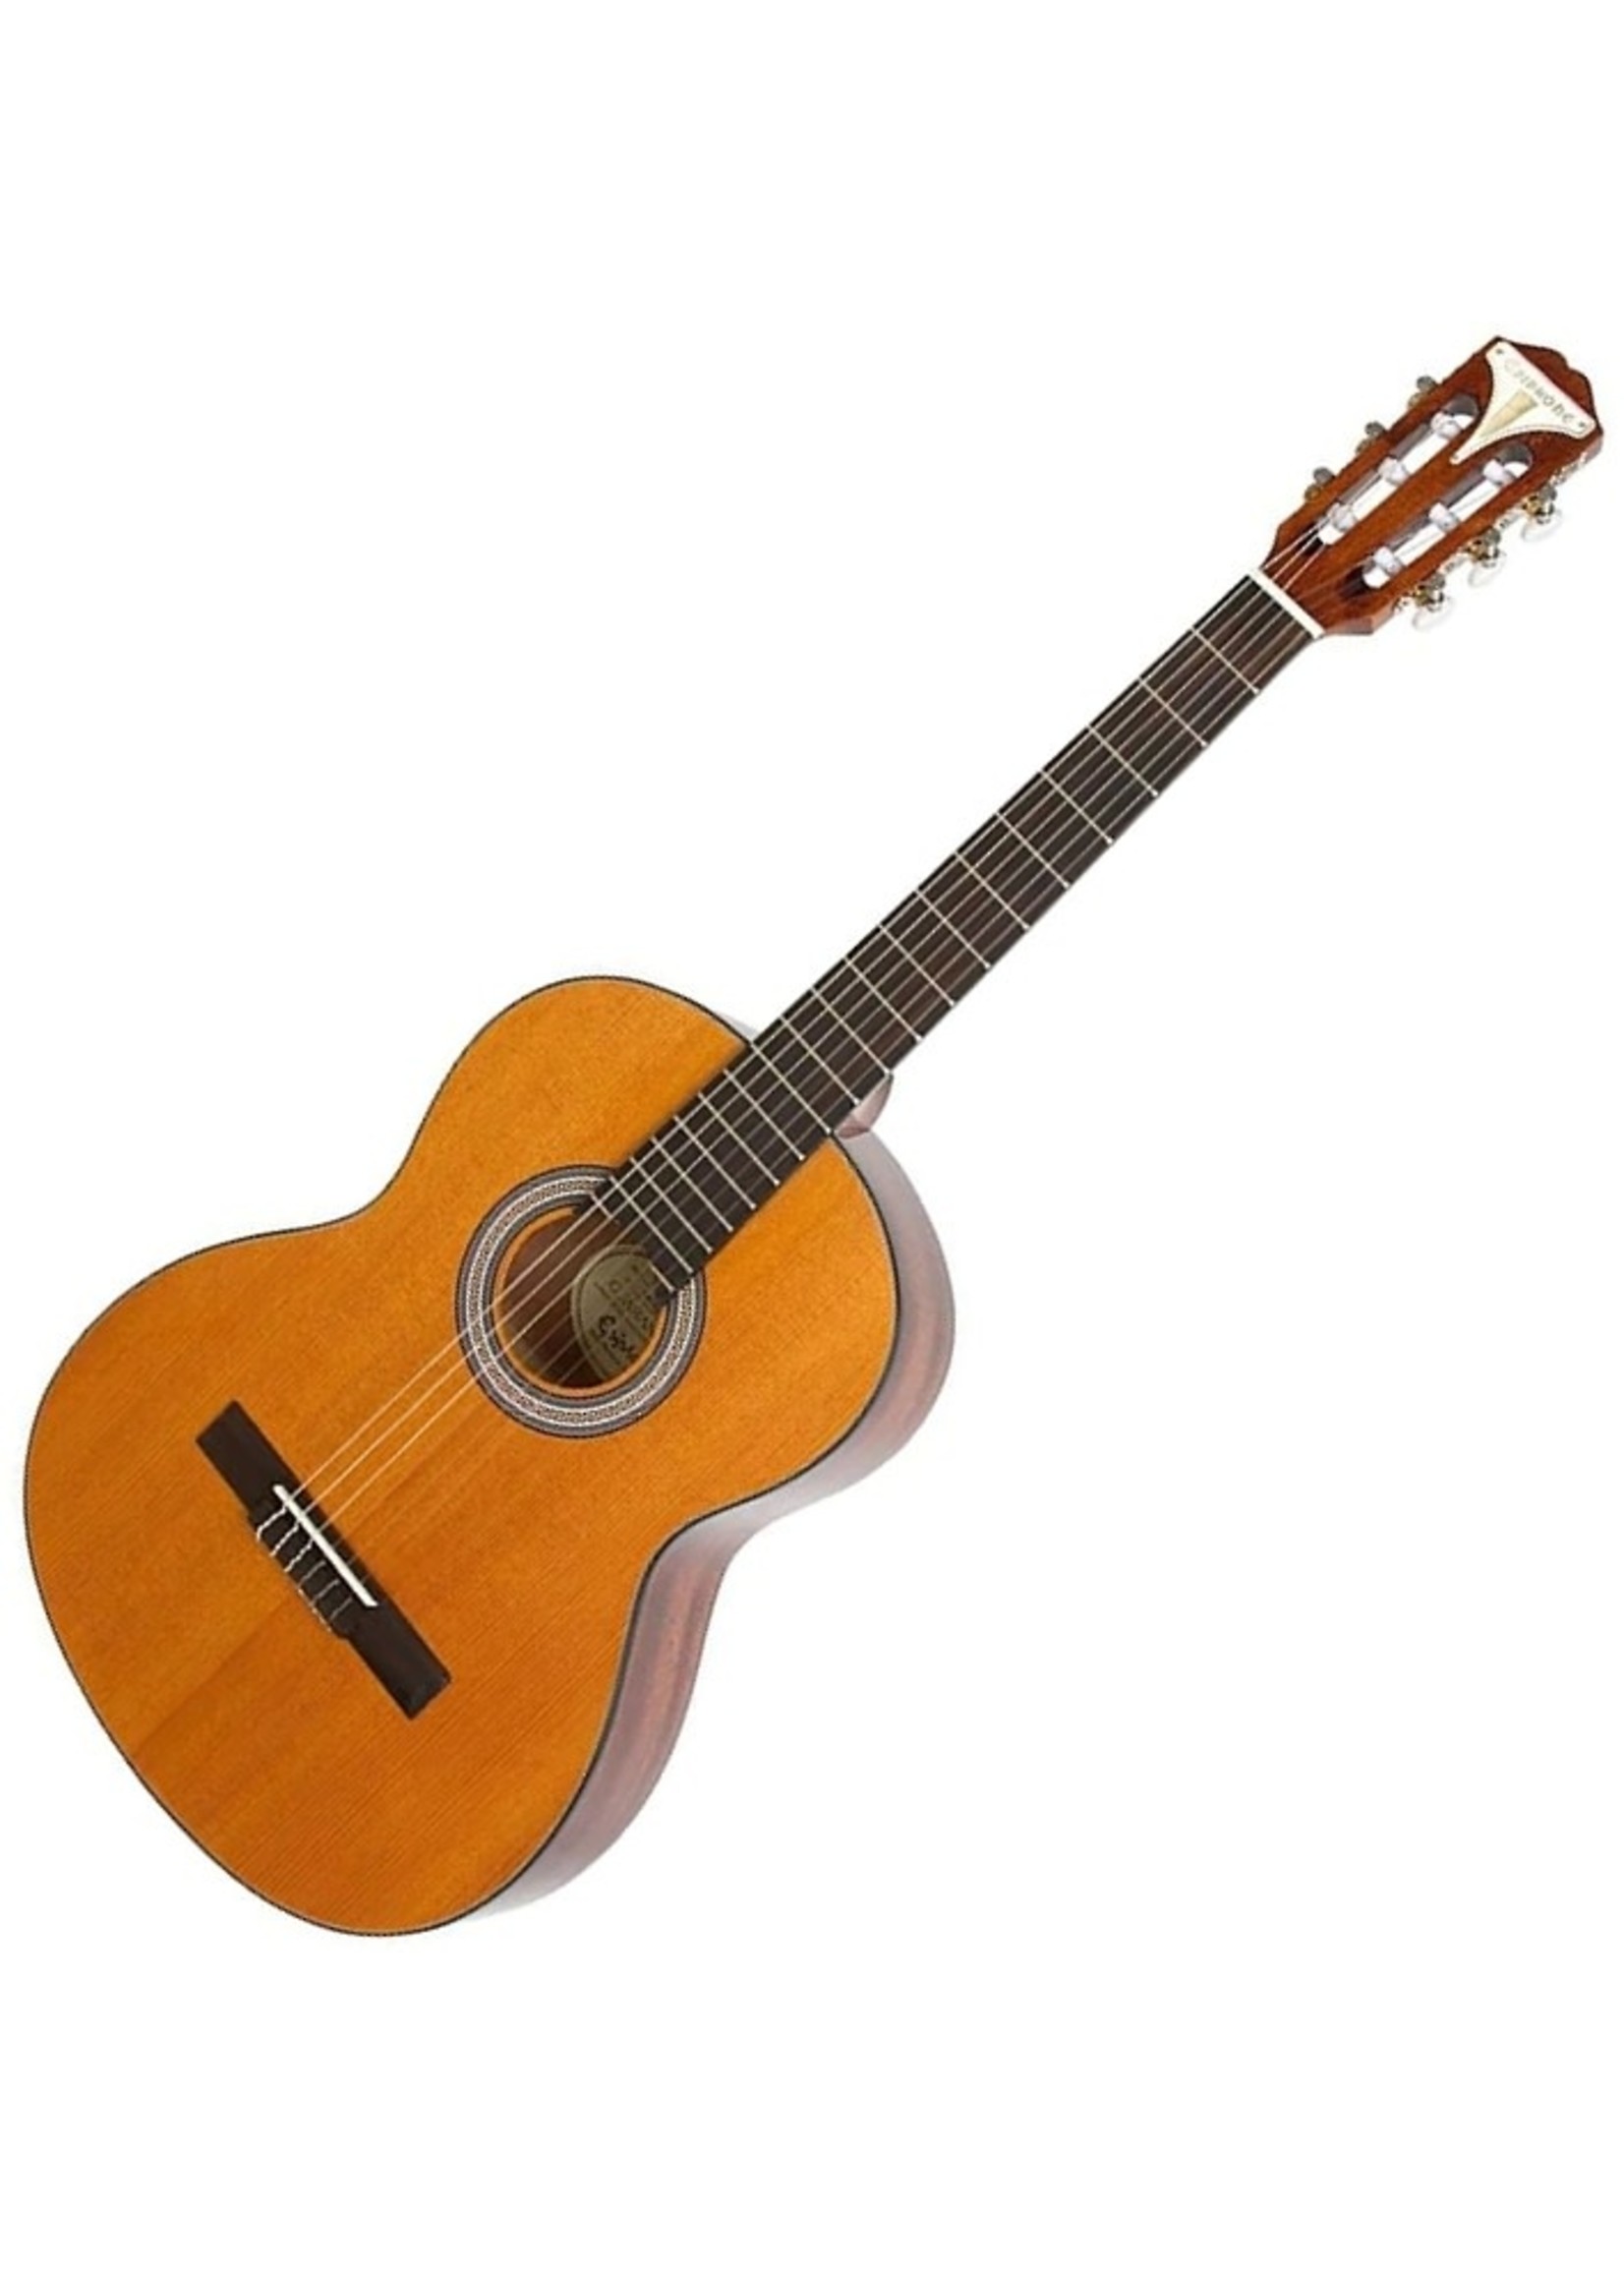 Epiphone Epiphone EAPCANCH 6-String RH Classical E1 Acoustic Guitar - Natural eapcanch